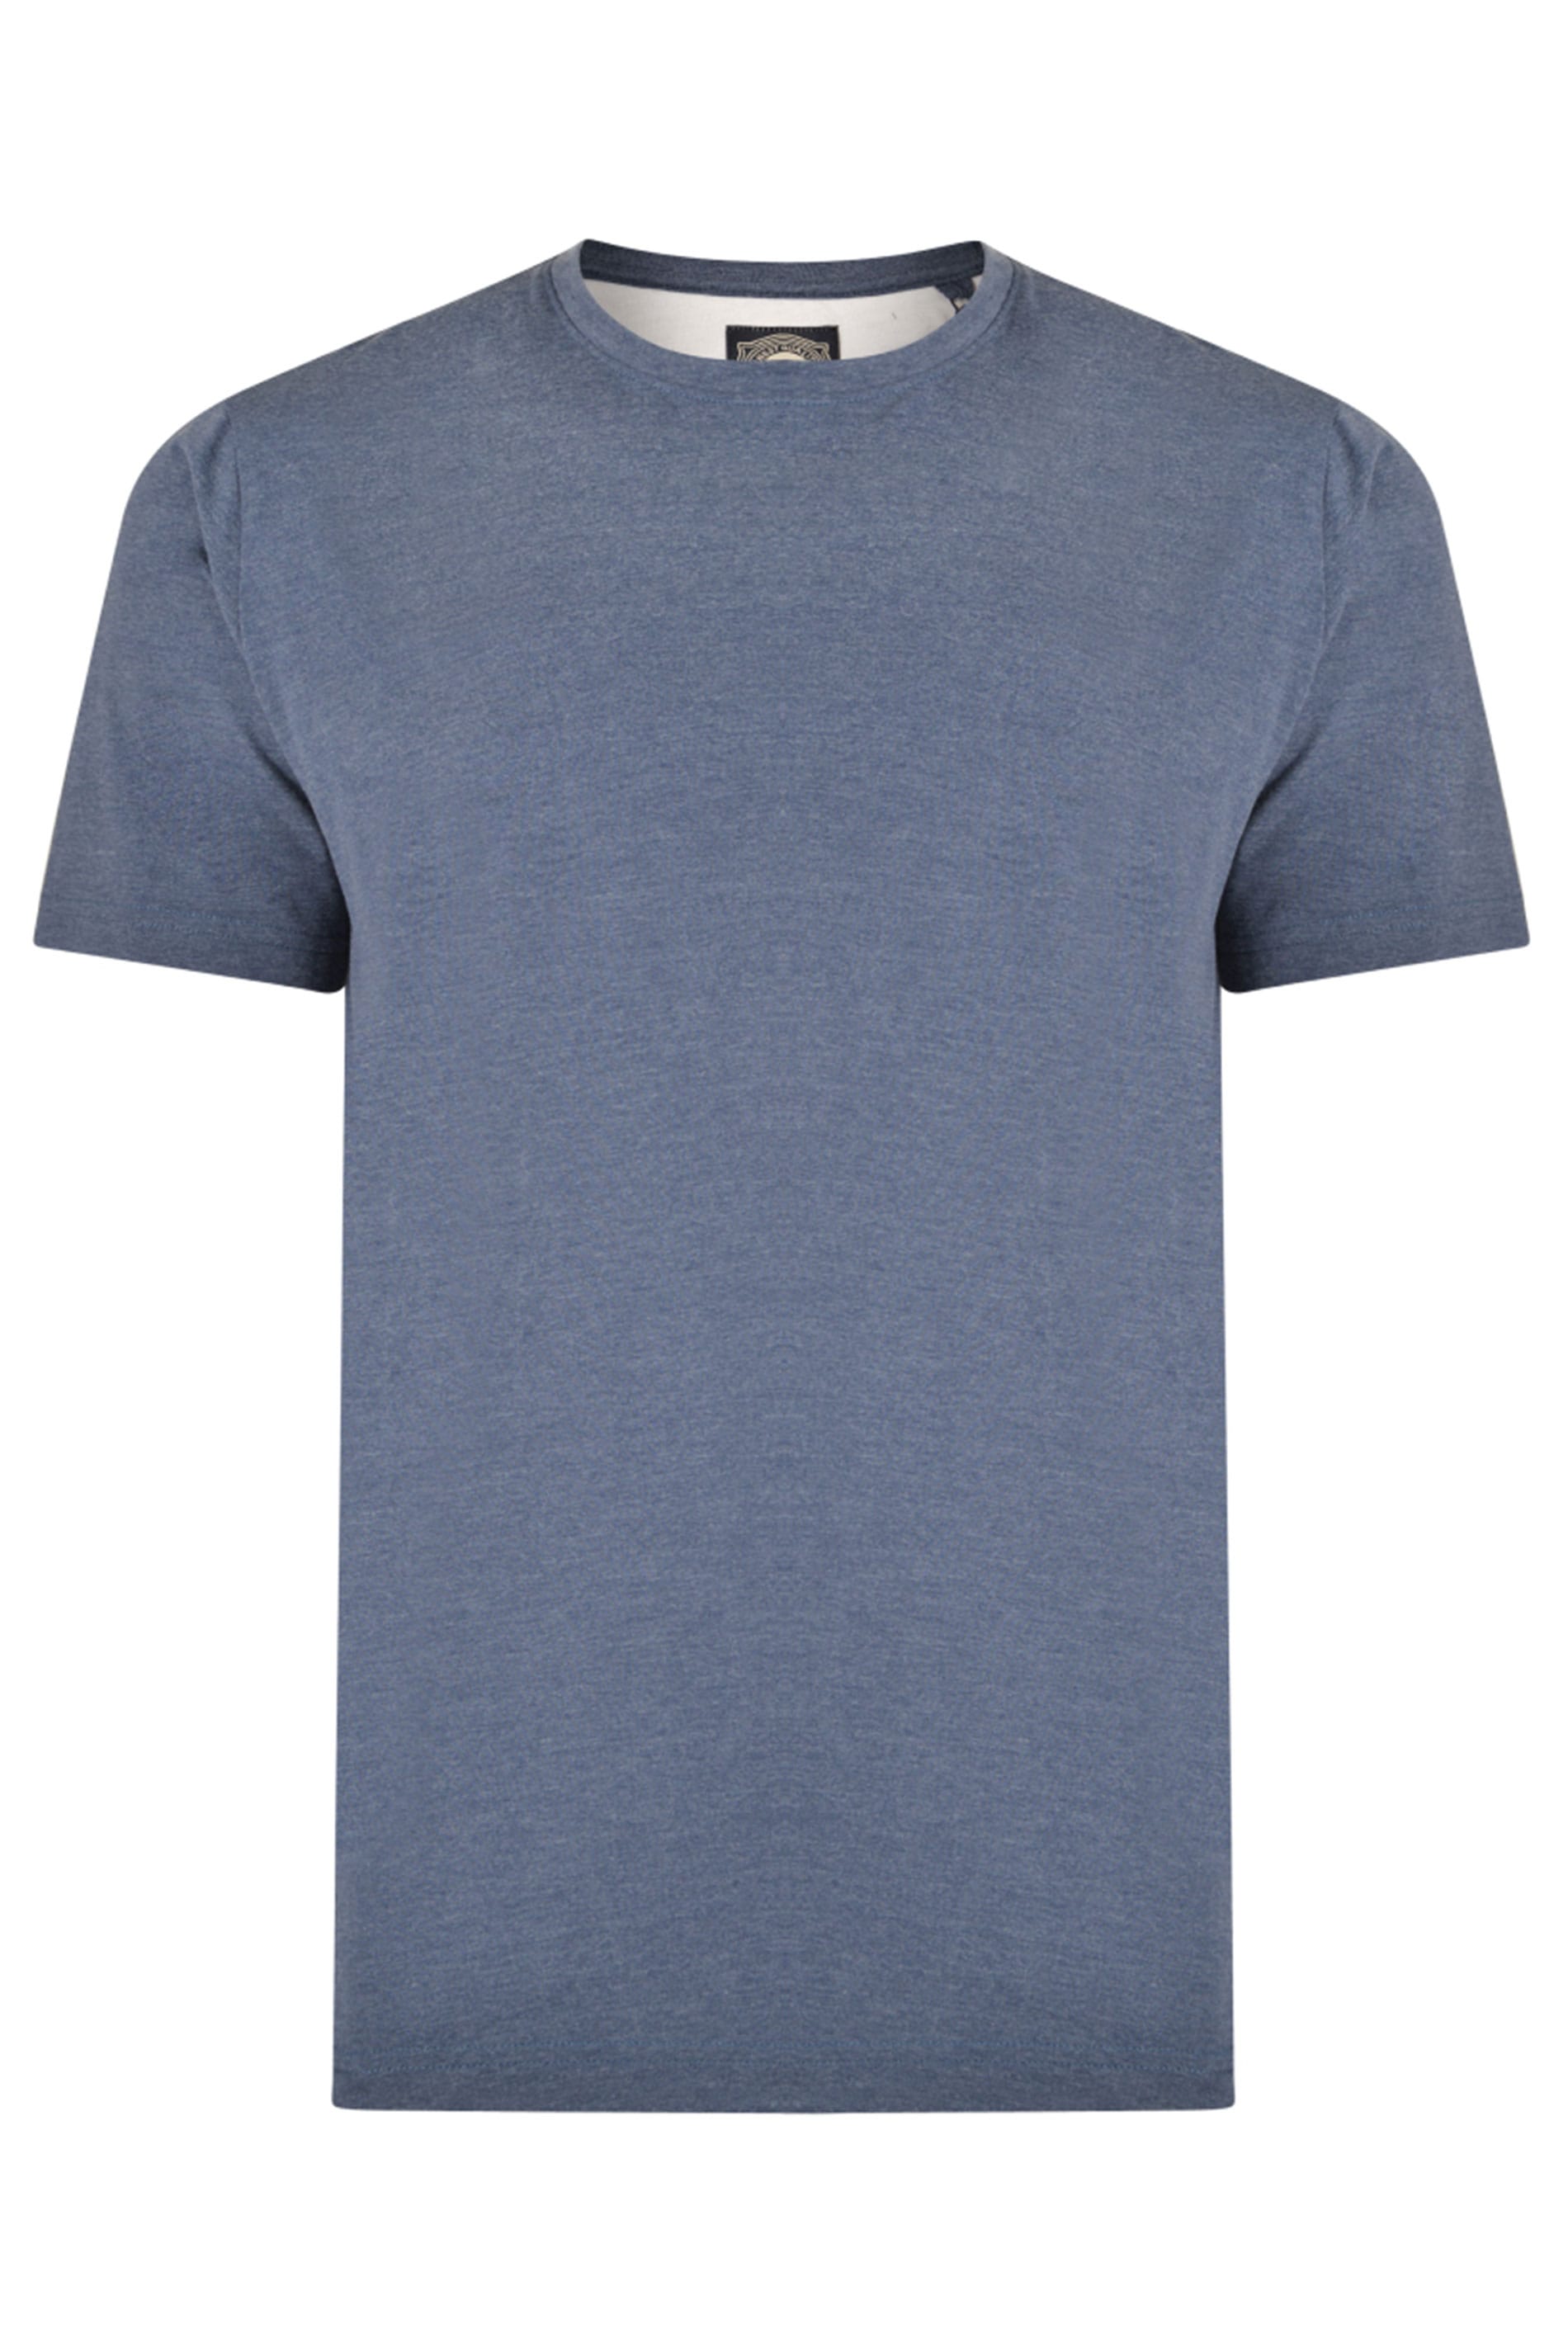 KAM Indigo Blue Plain T-Shirt | BadRhino